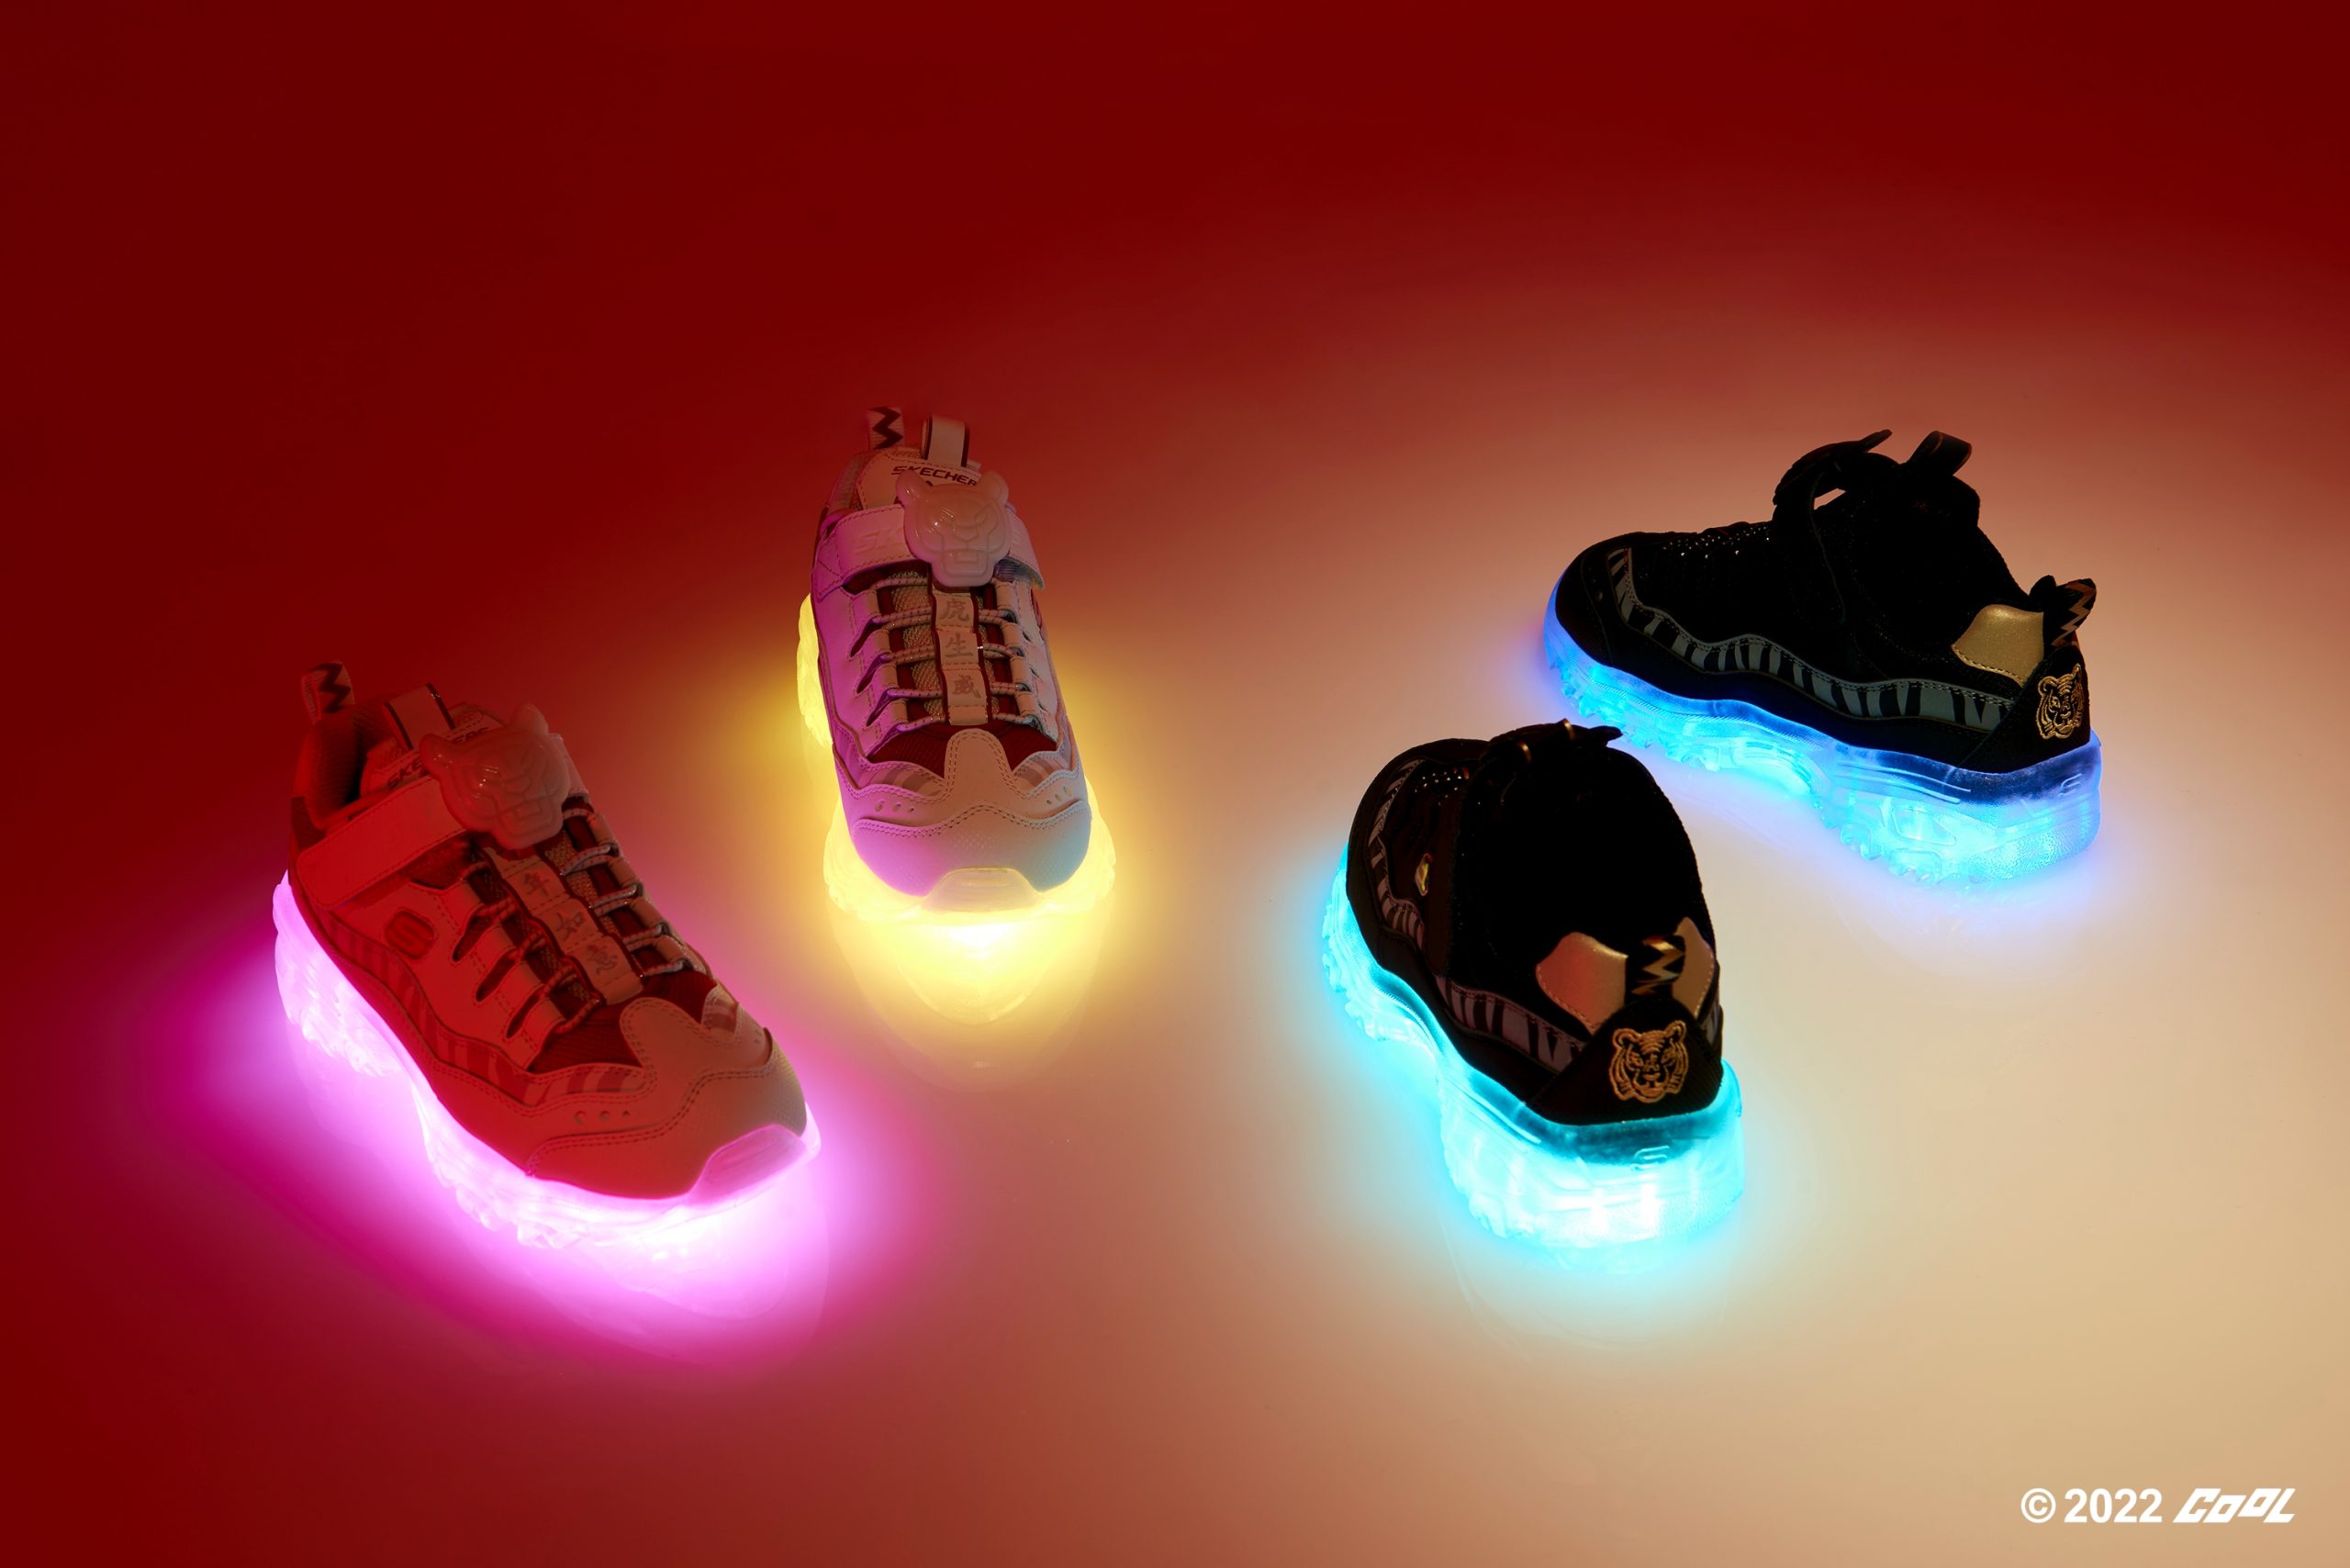 SKECHERS也因應新春推出了限定版的ICE D'LITES極地冰燈鞋系列